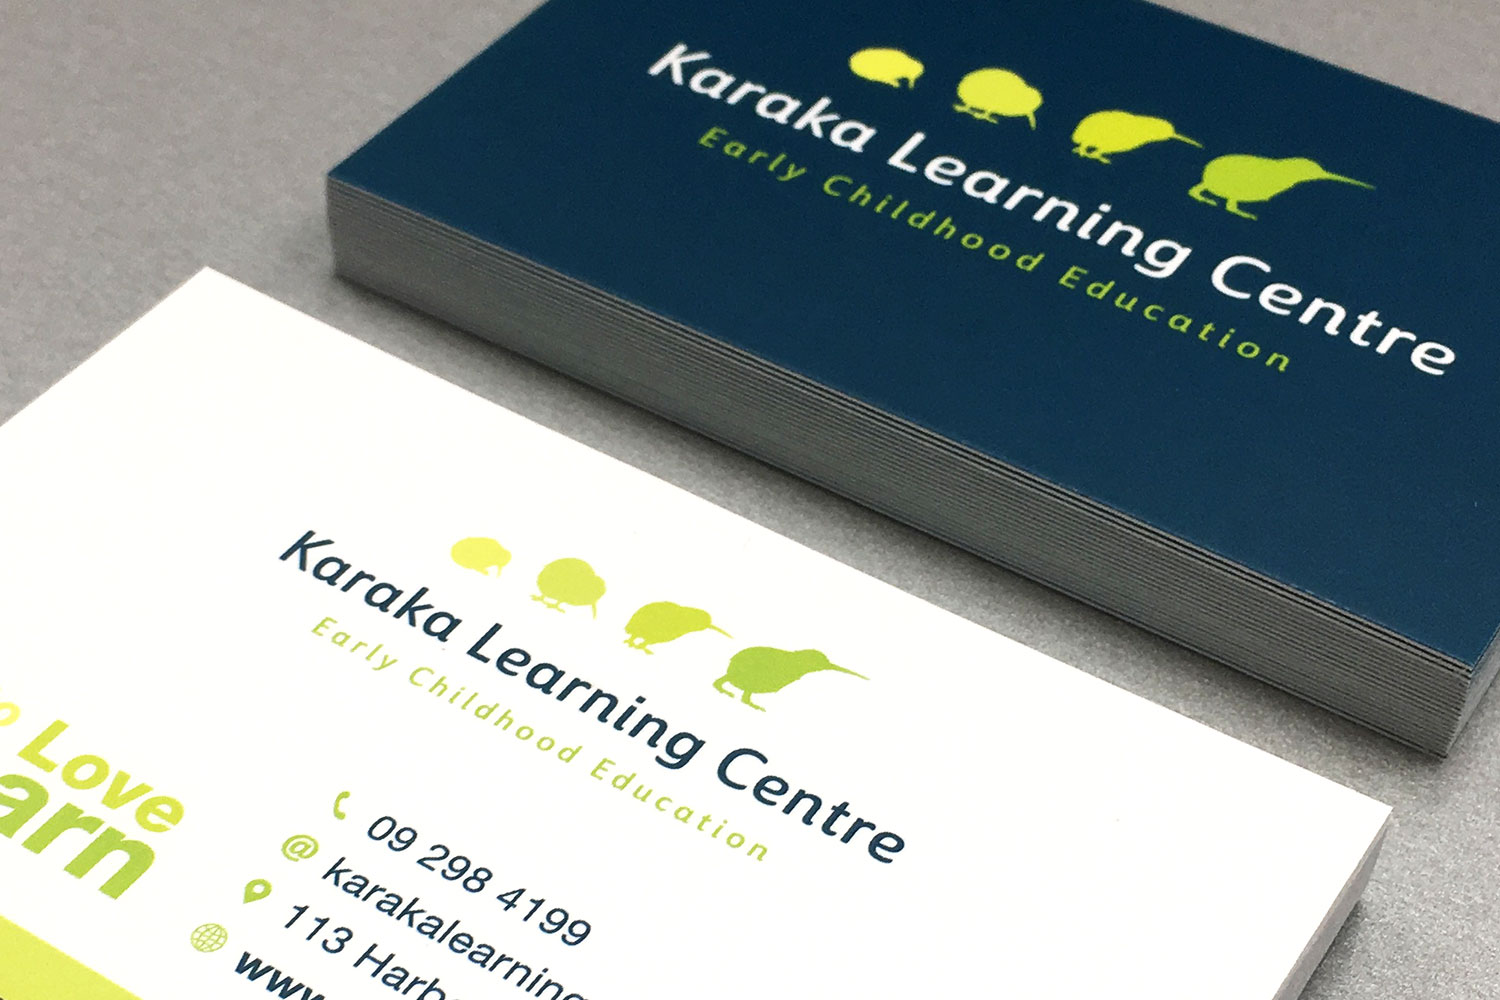 Karaka Learning Centre Business Cards